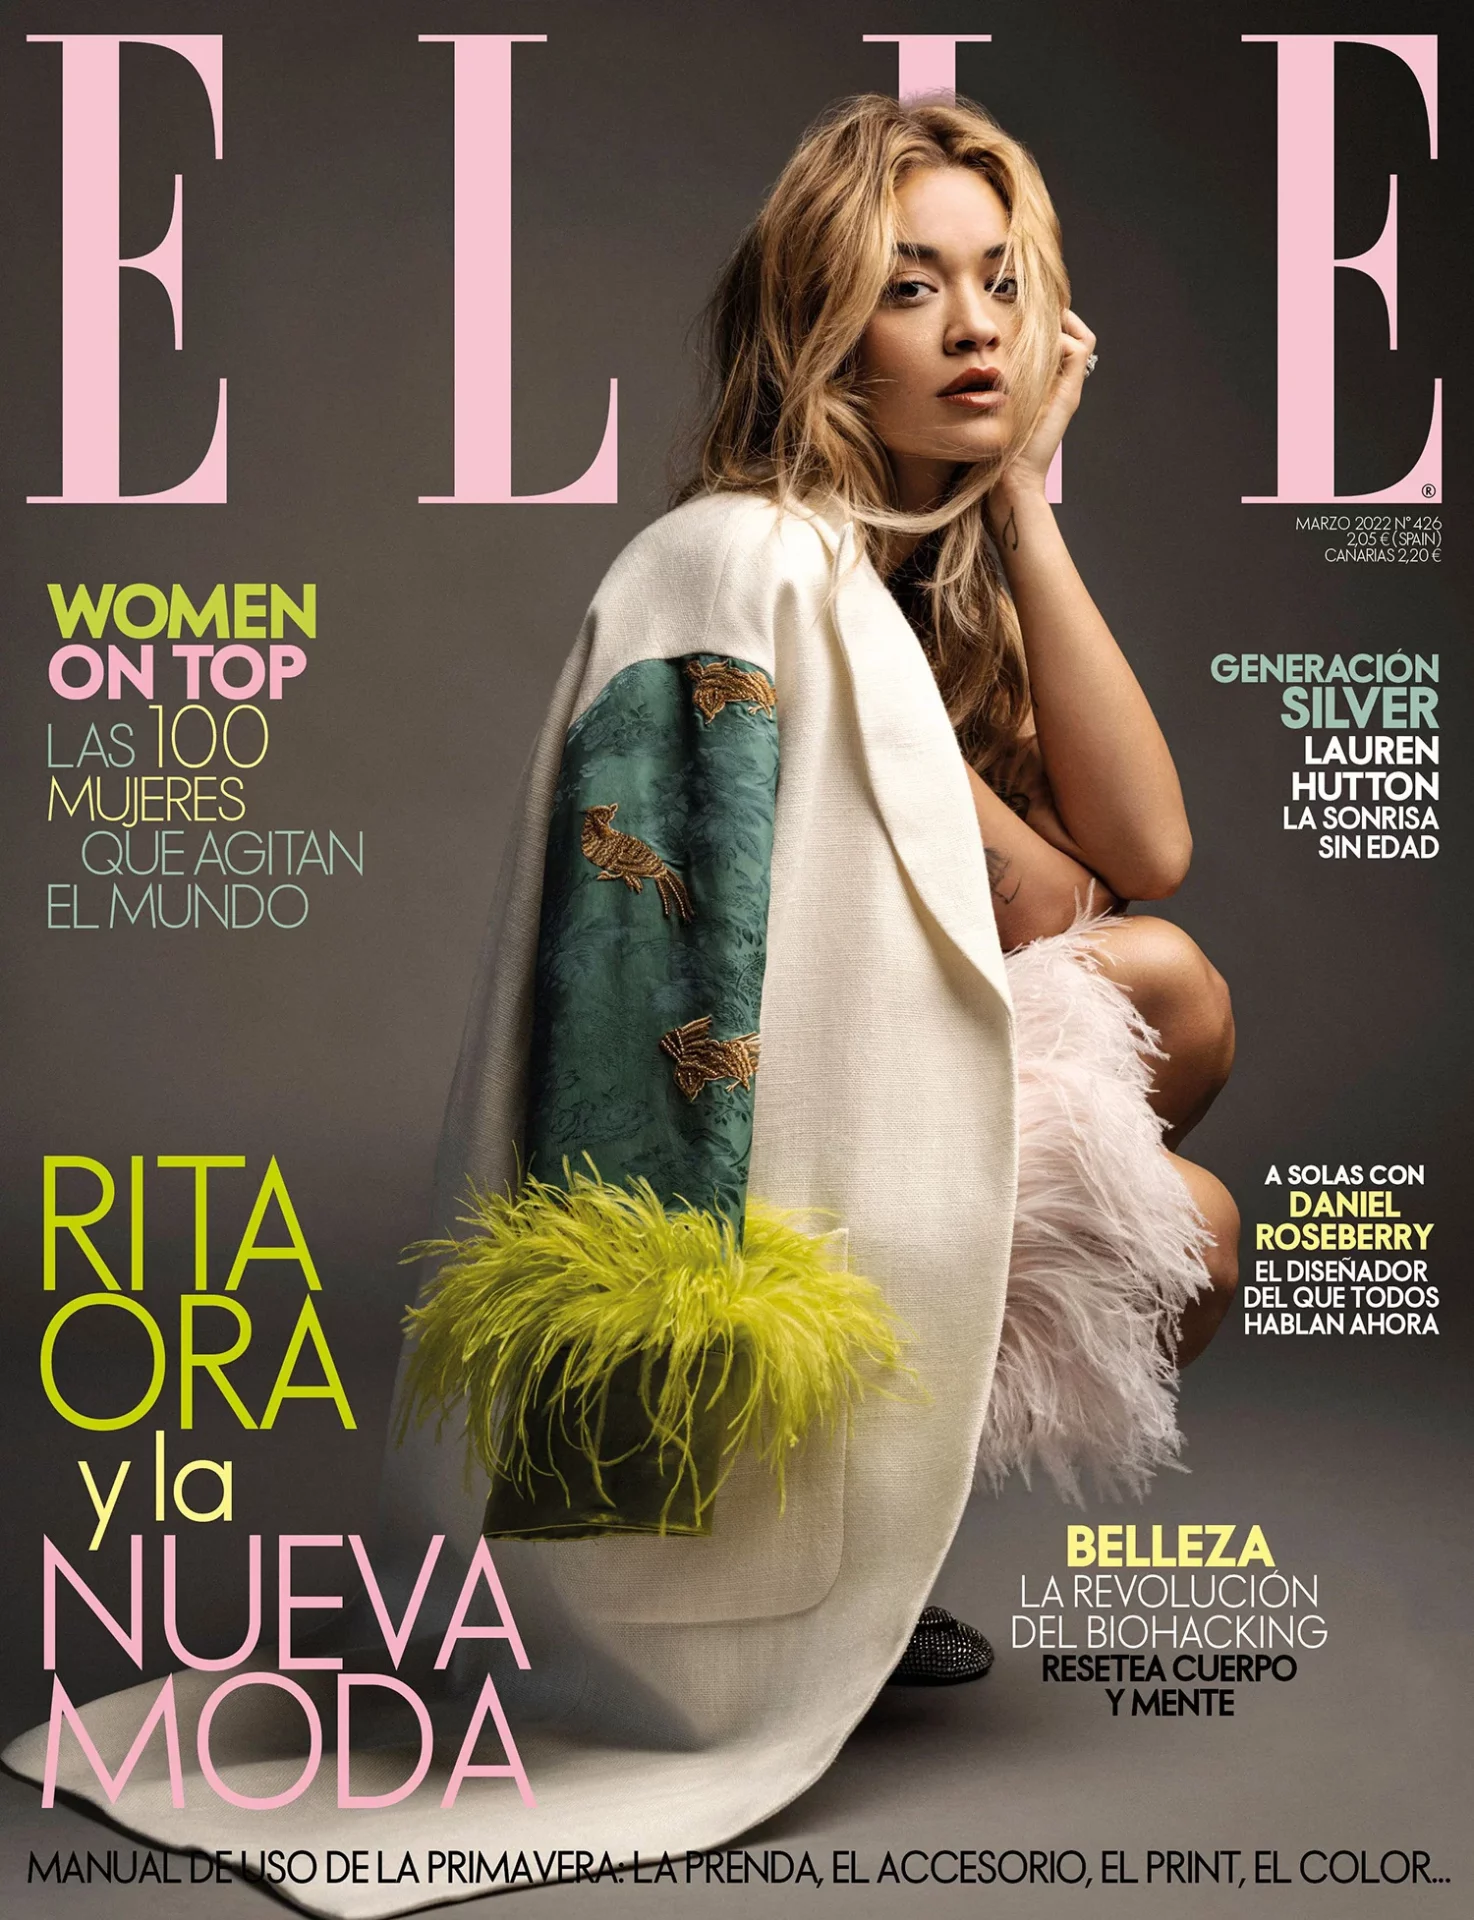 Rita Ora covers Elle Spain March 2022 by Juankr